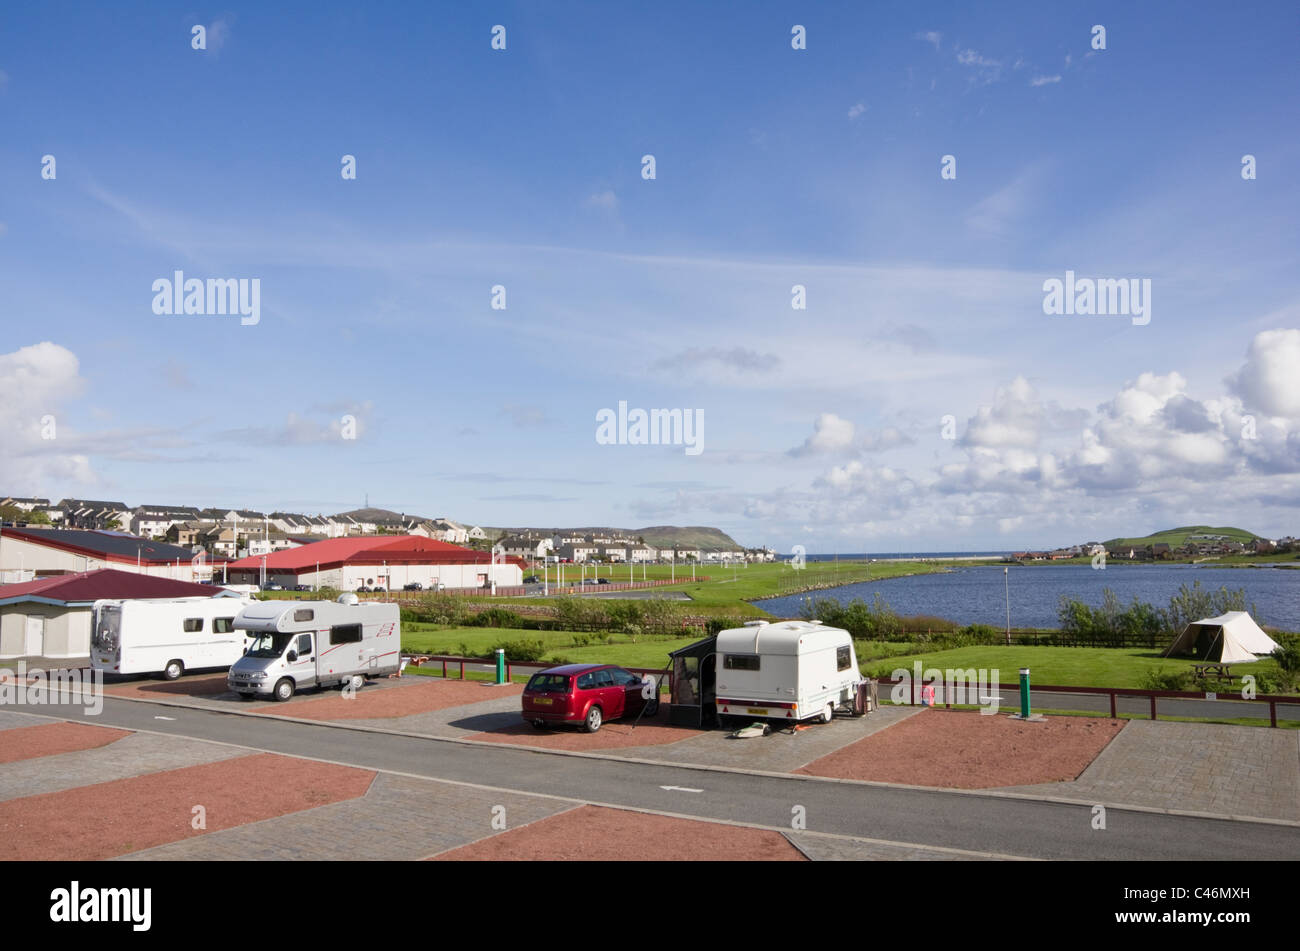 Clickimin Leisure Complex campsite and Loch with sports centre beyond. Lerwick, Shetland Islands, Scotland, UK, Britain. Stock Photo